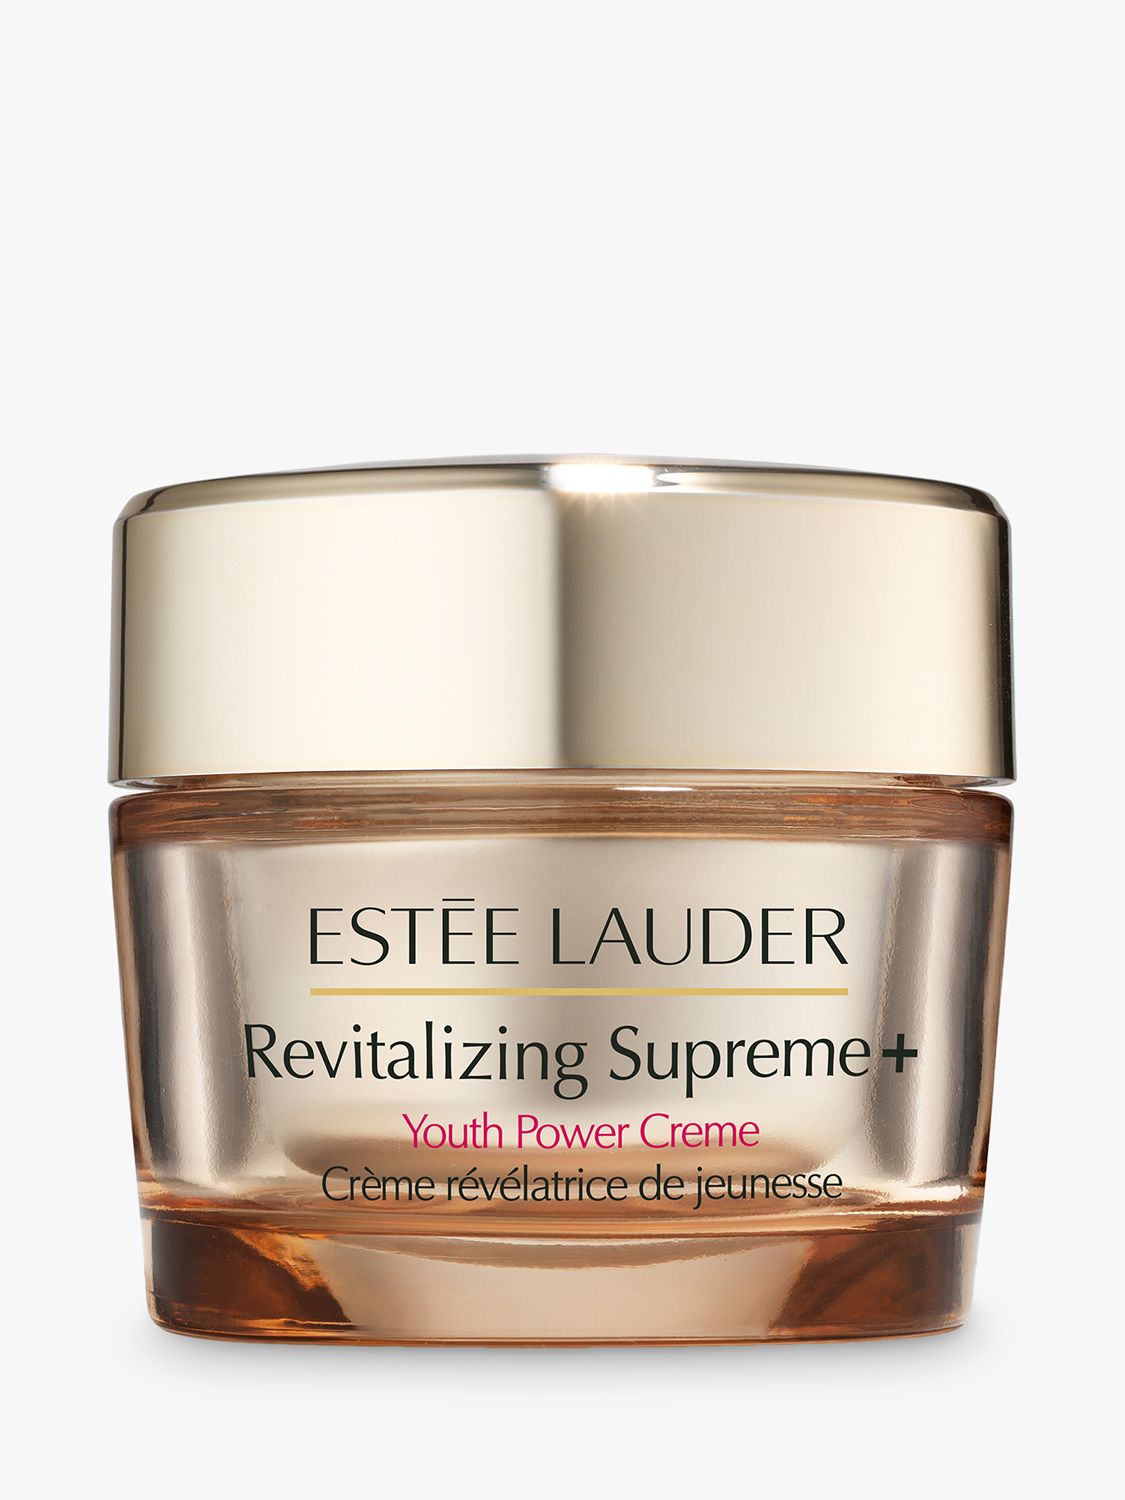 Estée Lauder Revitalizing Supreme+ Youth Power Creme Moisturiser, 50ml 1